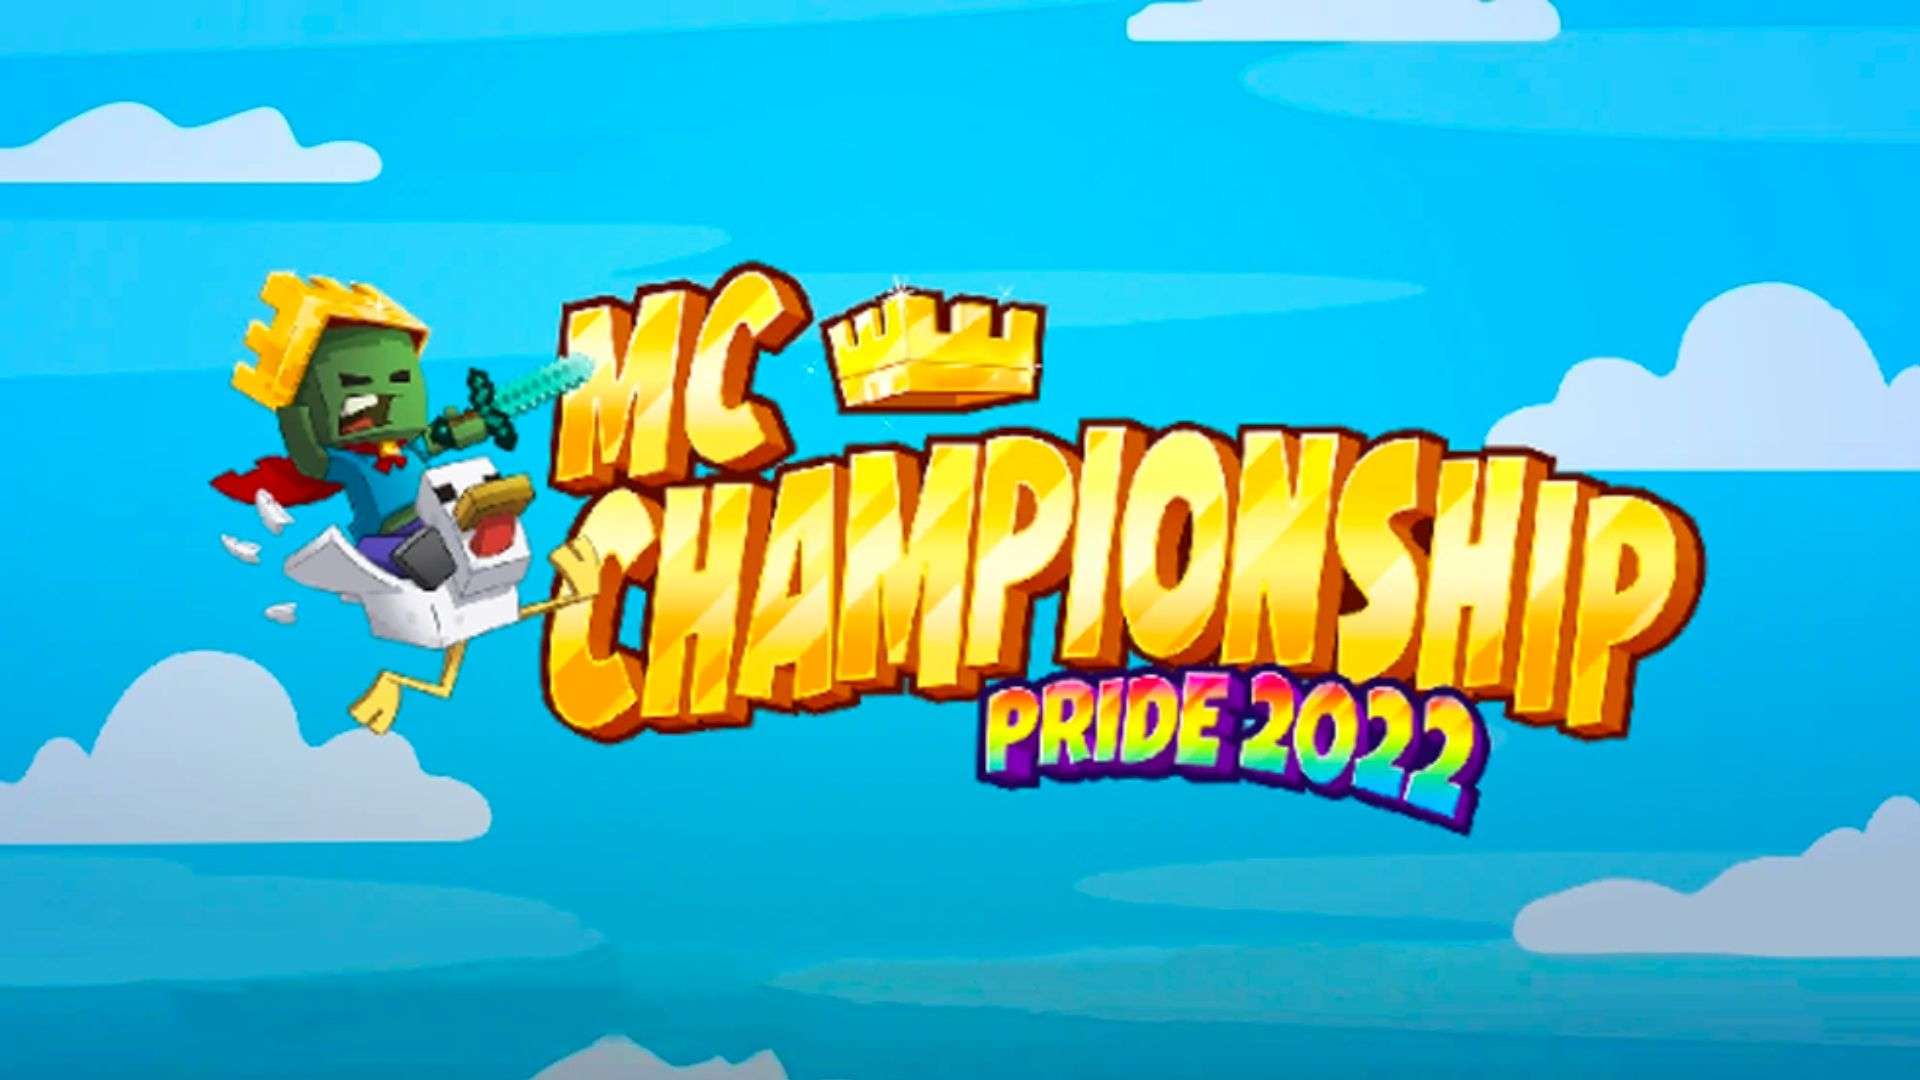 MCC Pride 2022 logo